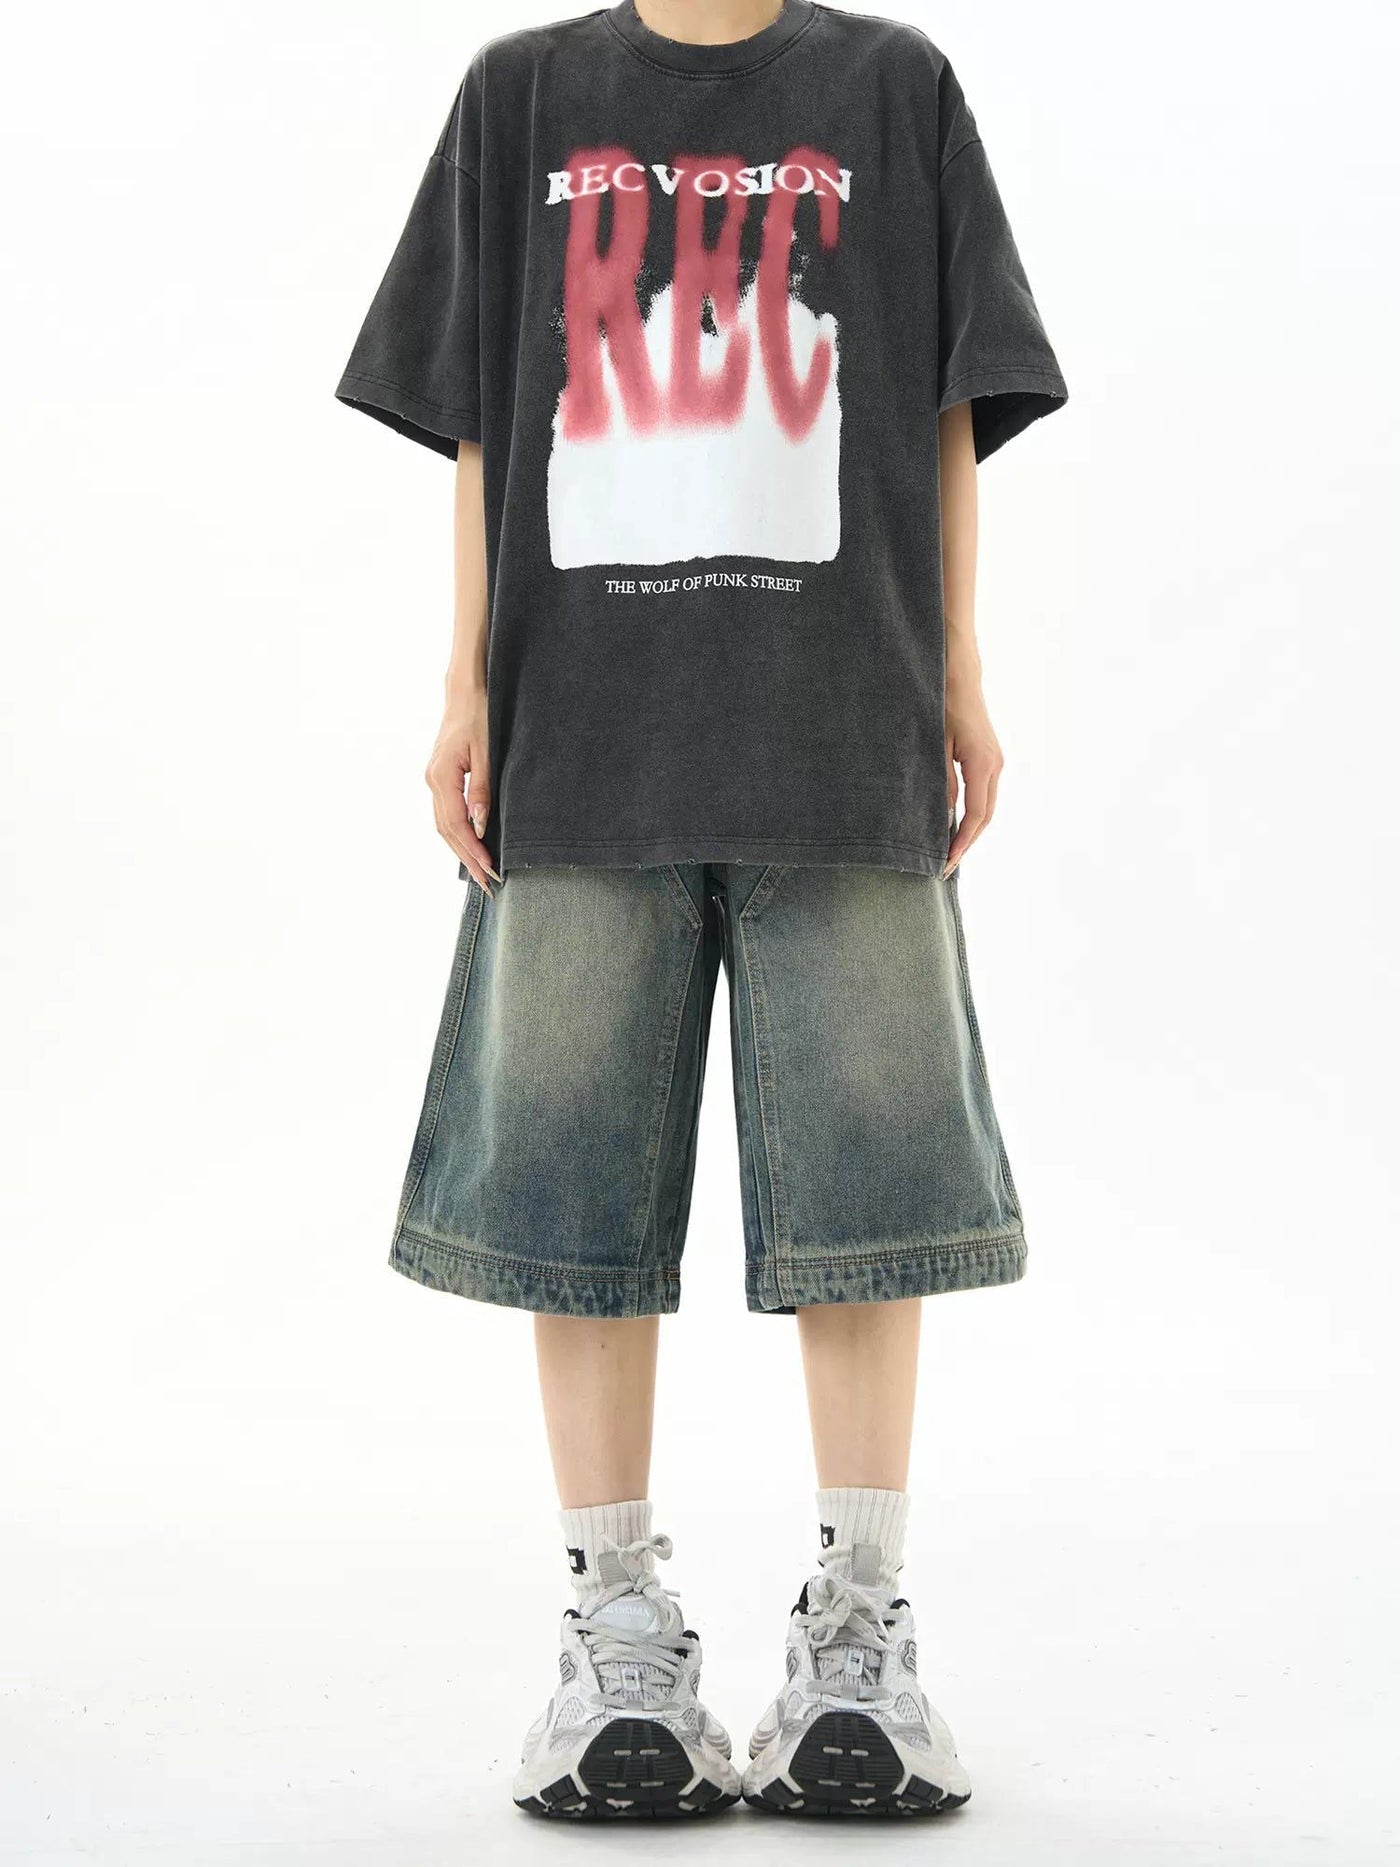 Retro Washed Denim Shorts Korean Street Fashion Shorts By MaxDstr Shop Online at OH Vault